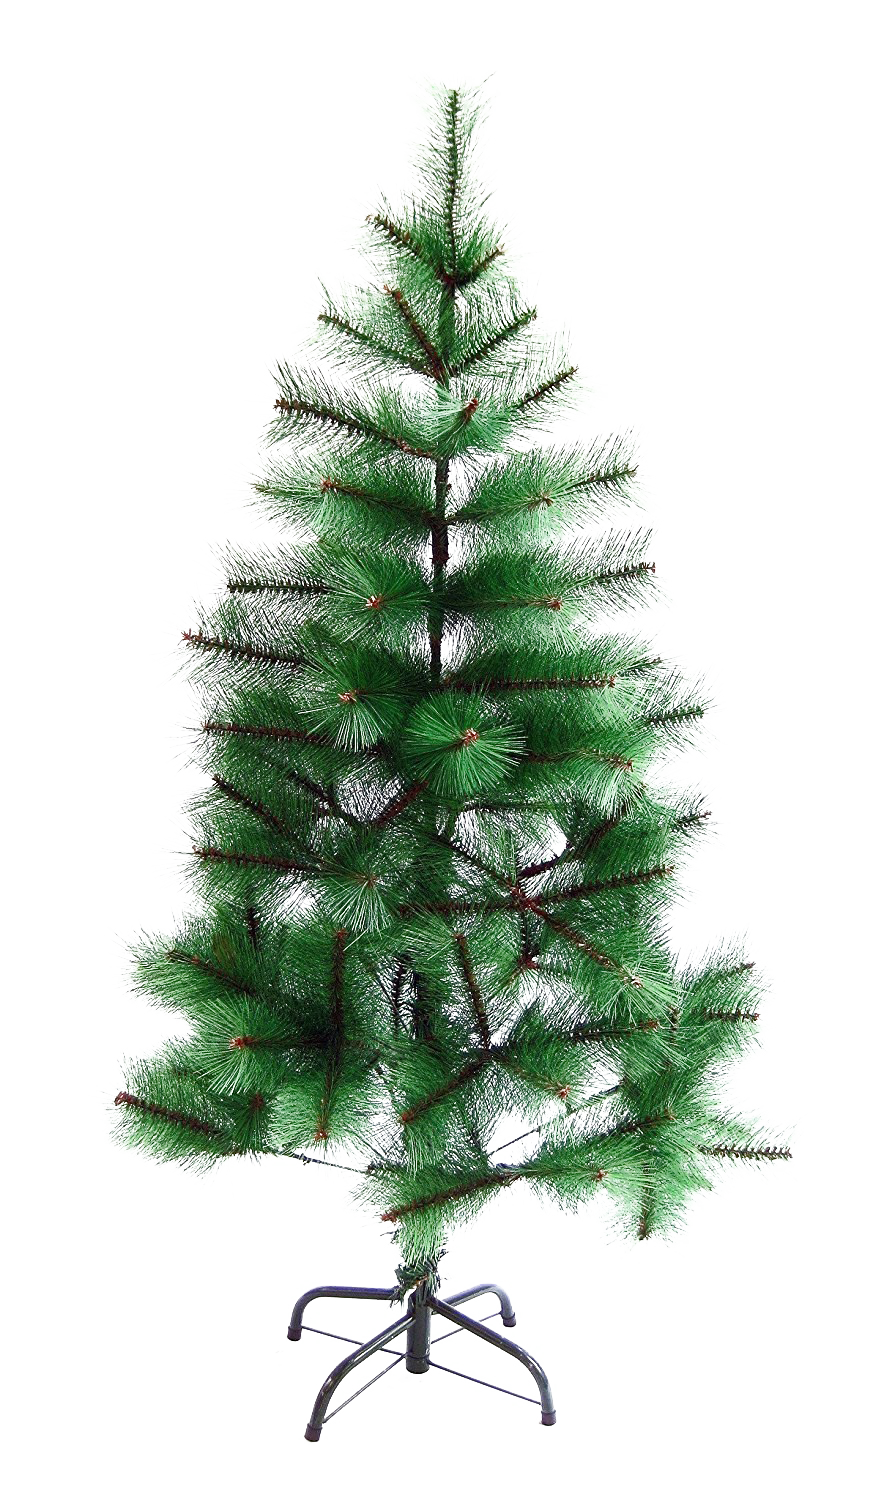 Christmas Pine Tree Transparent Background